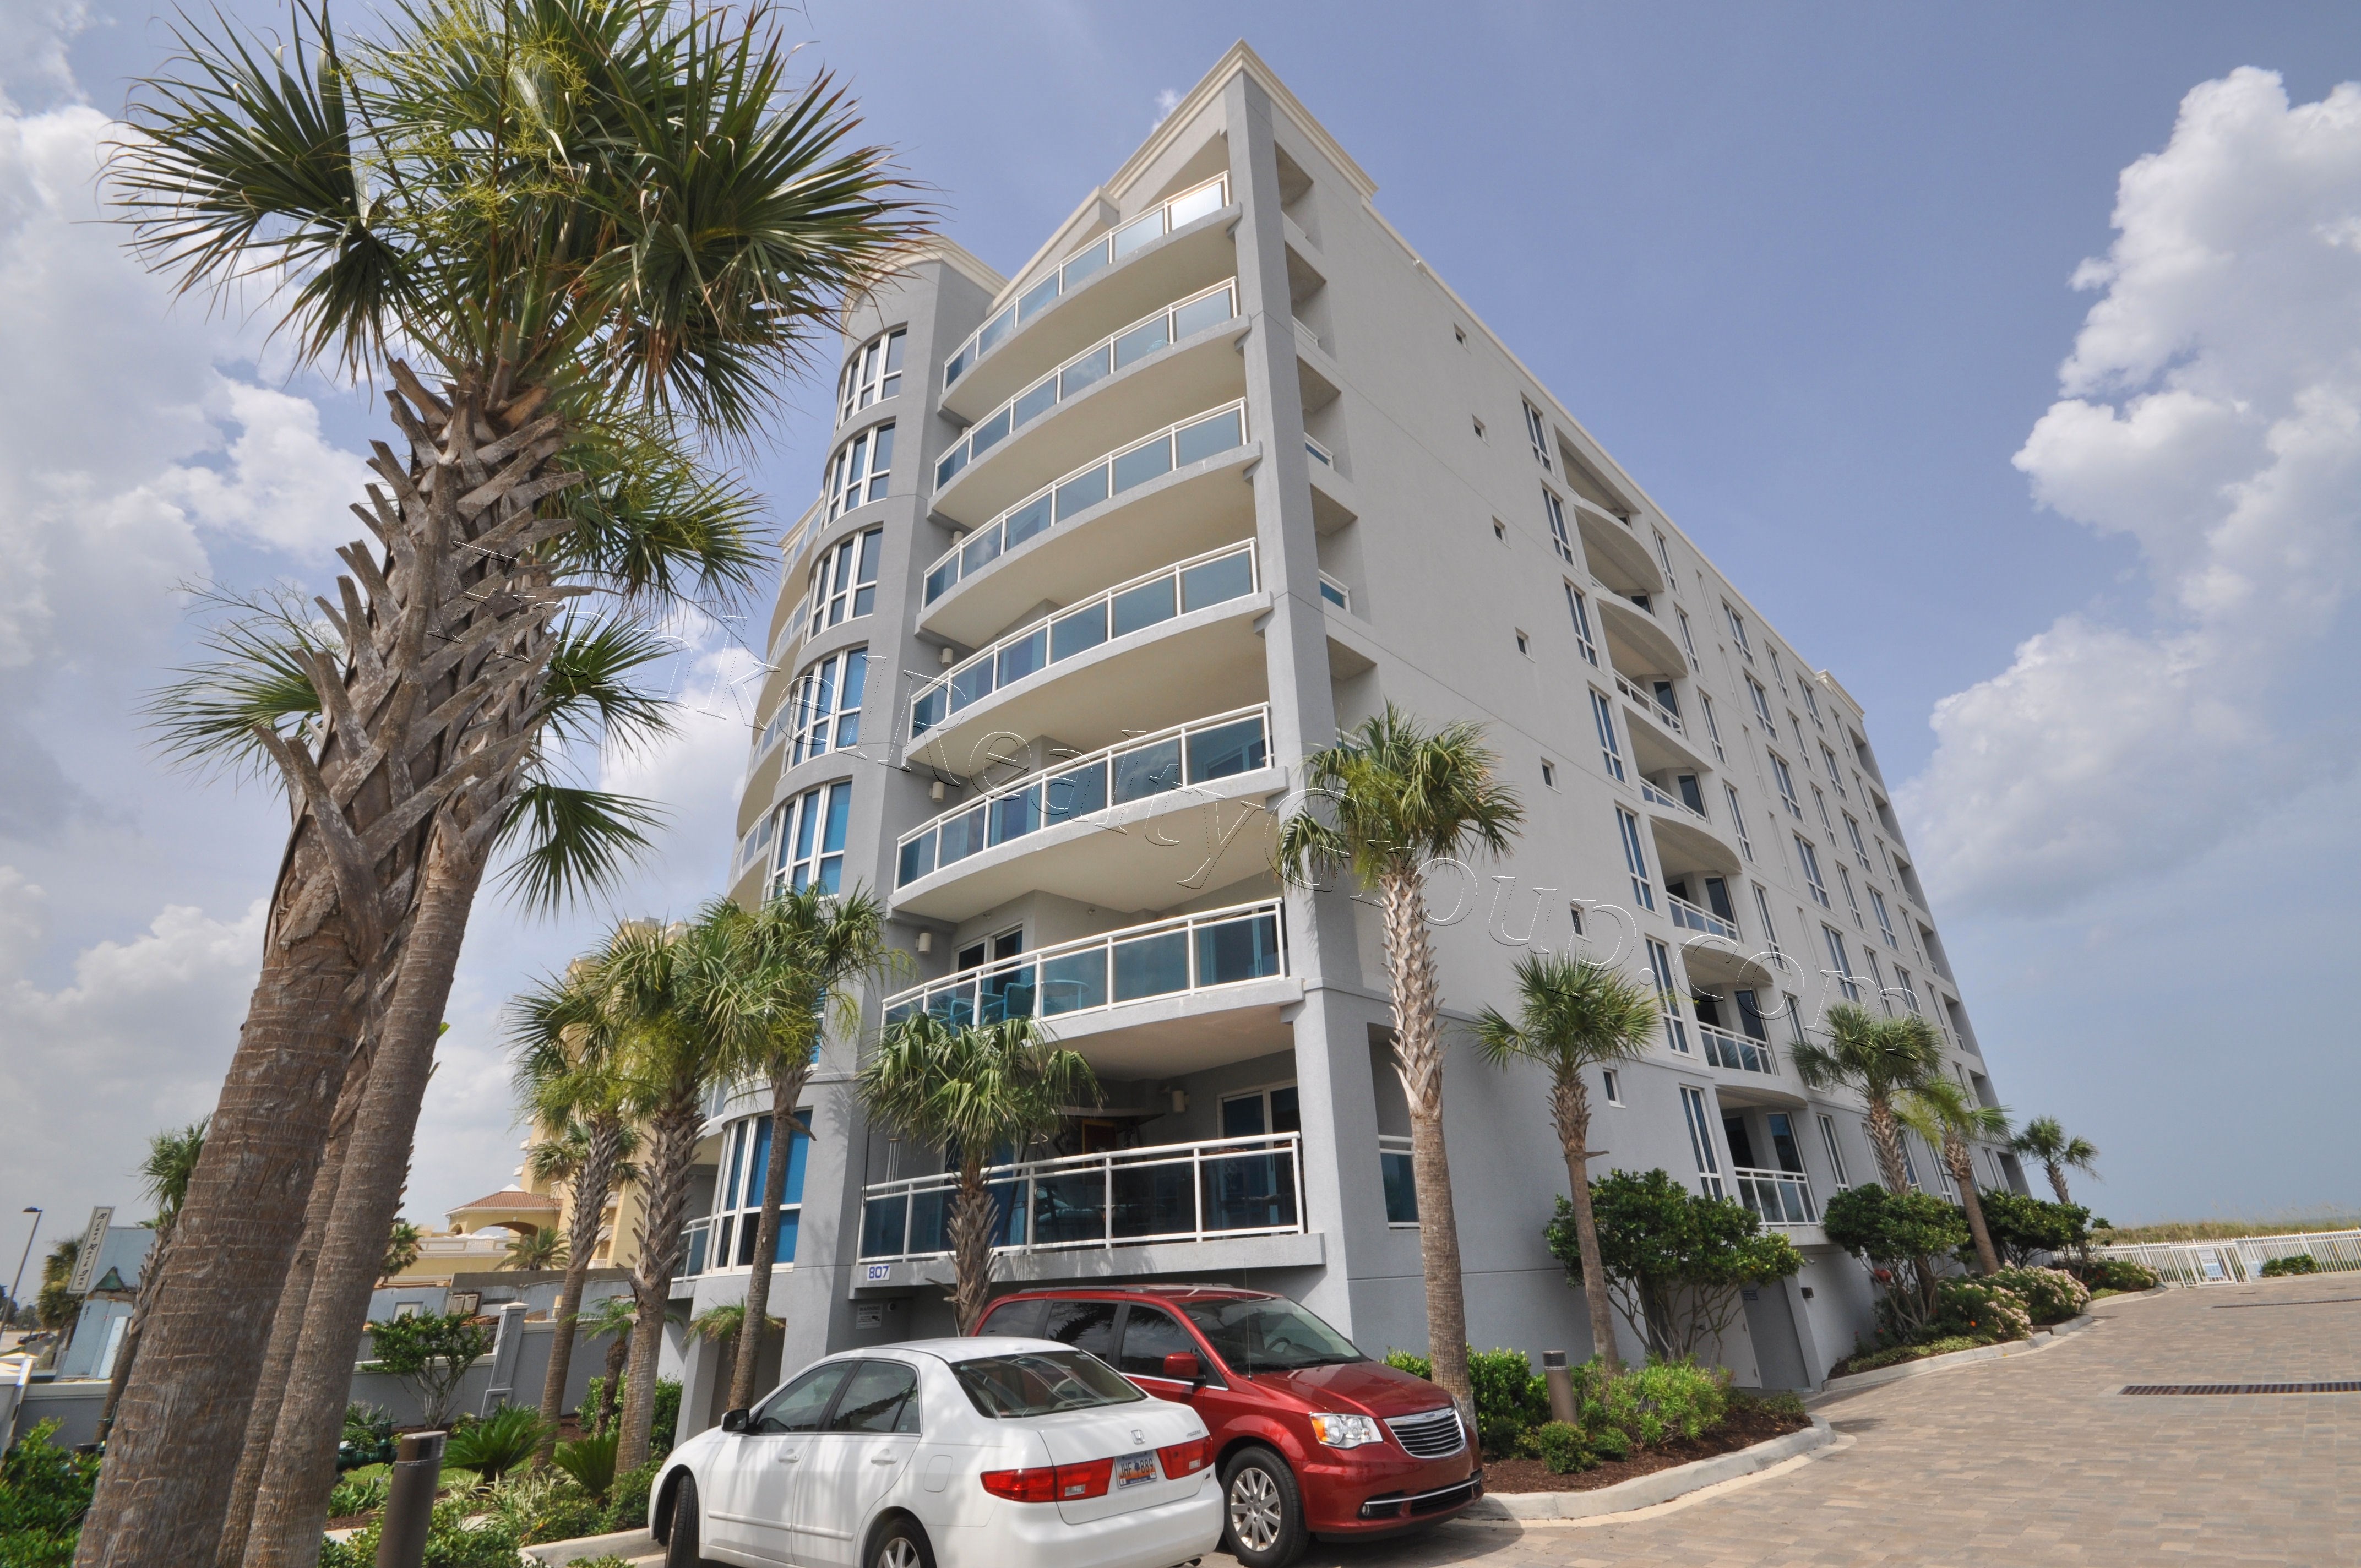 Acquilus III Jacksonville Beach Oceanfront Condos for Sale